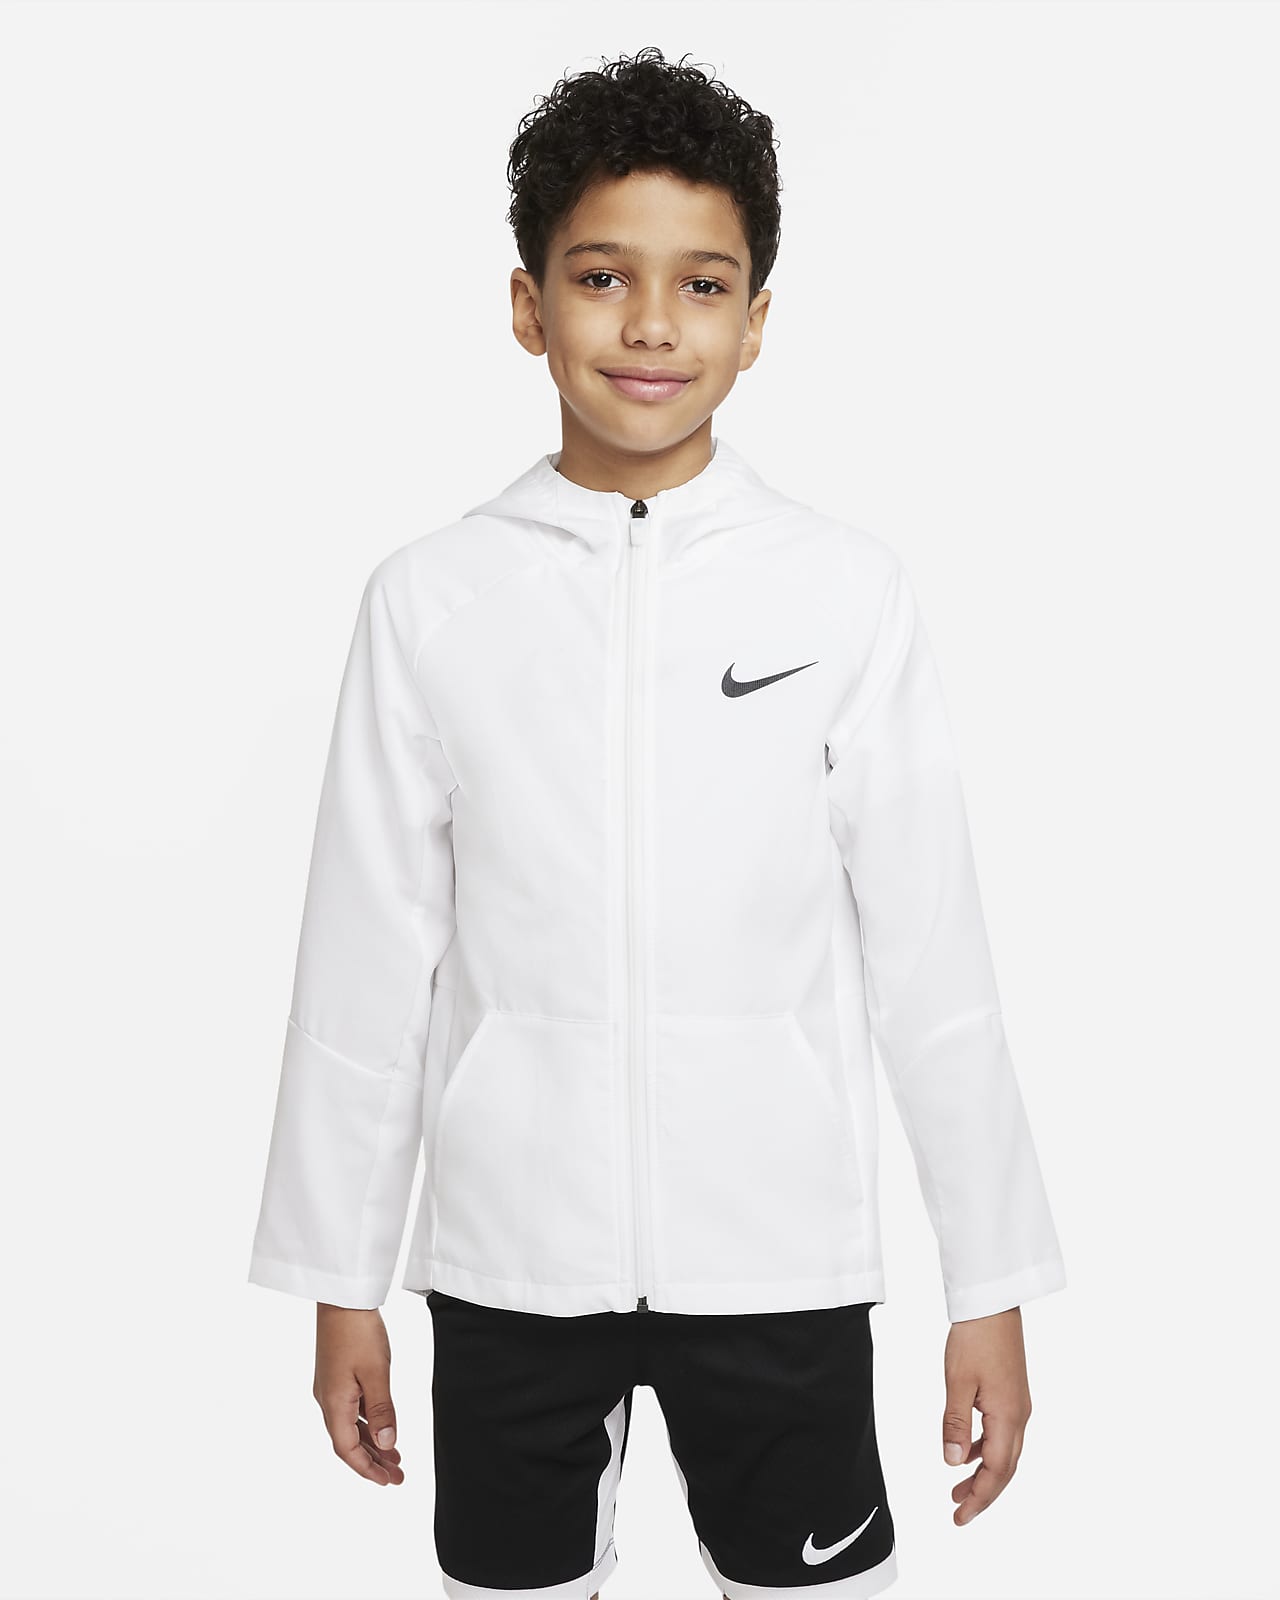 Nike Dri-FIT gewebte Trainingsjacke für ältere Kinder (Jungen)